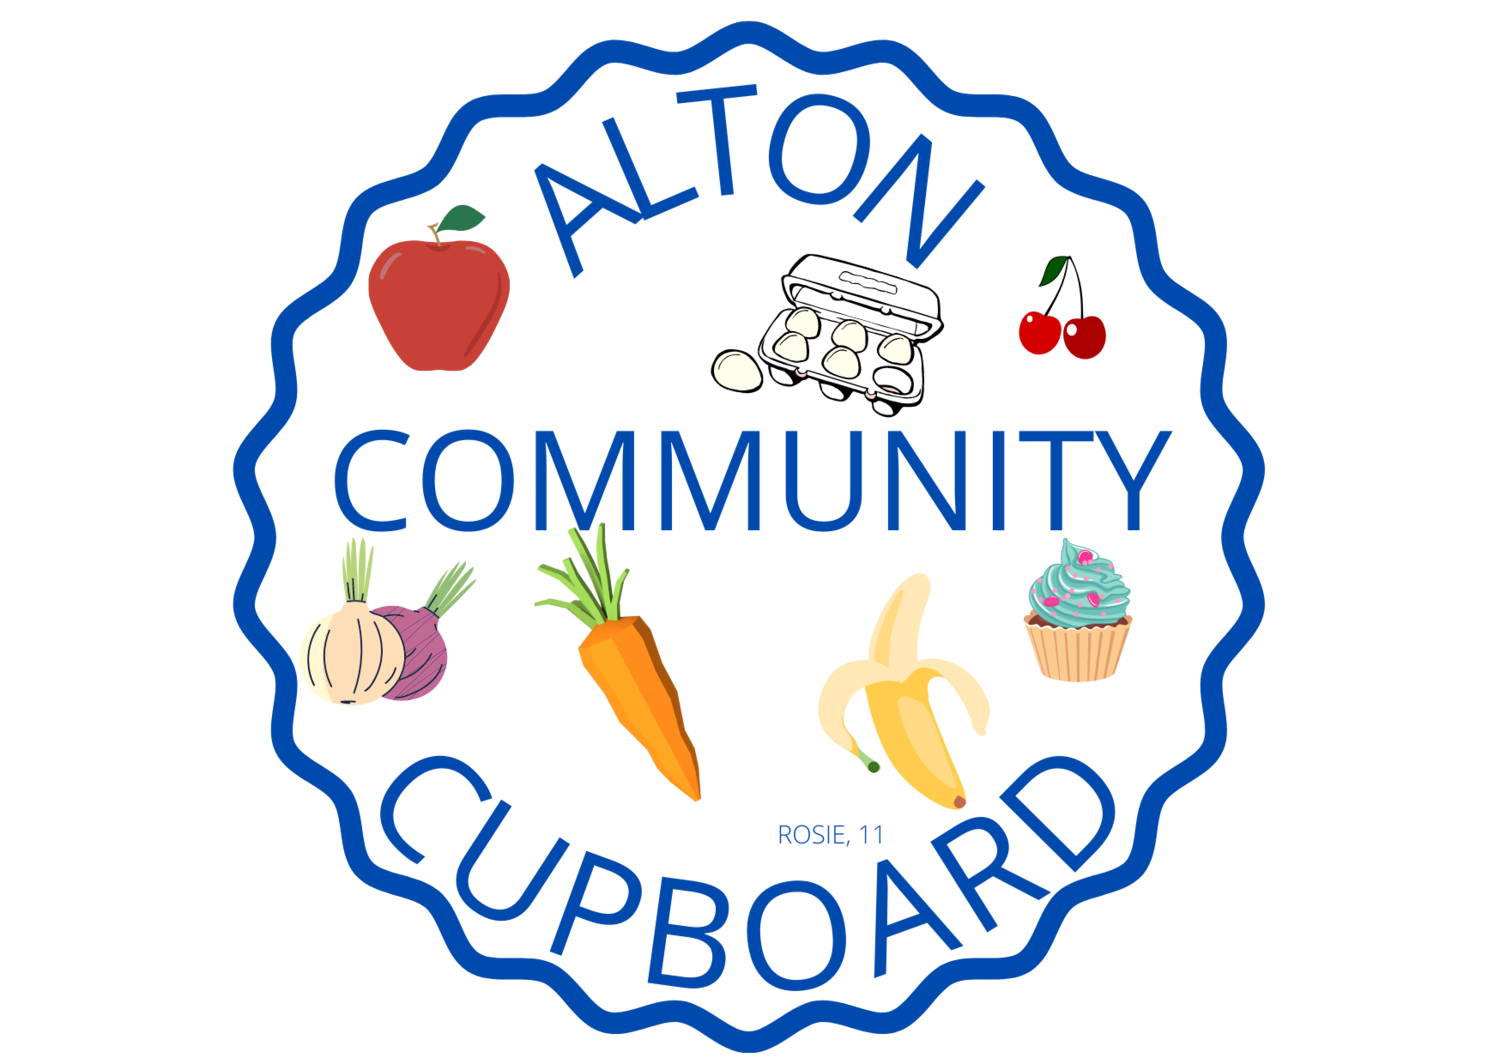 Farringdon Parish Council Hampshire Alton Community Cupboard